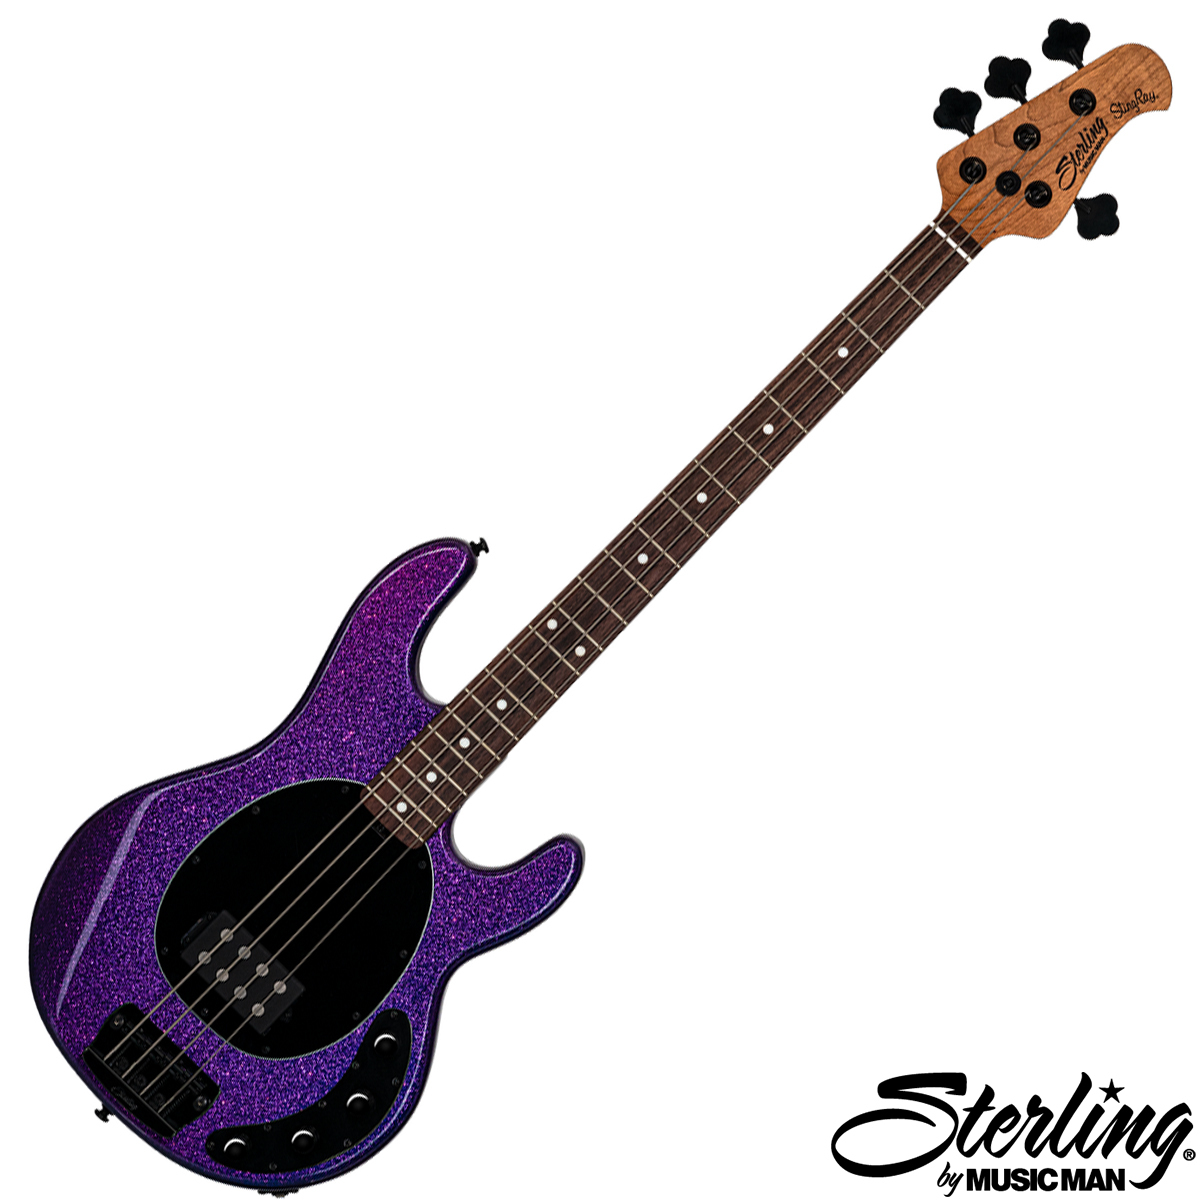 又昇樂器.音響】預購Sterling by MusicMan StingRay RAY34 PSK Bass